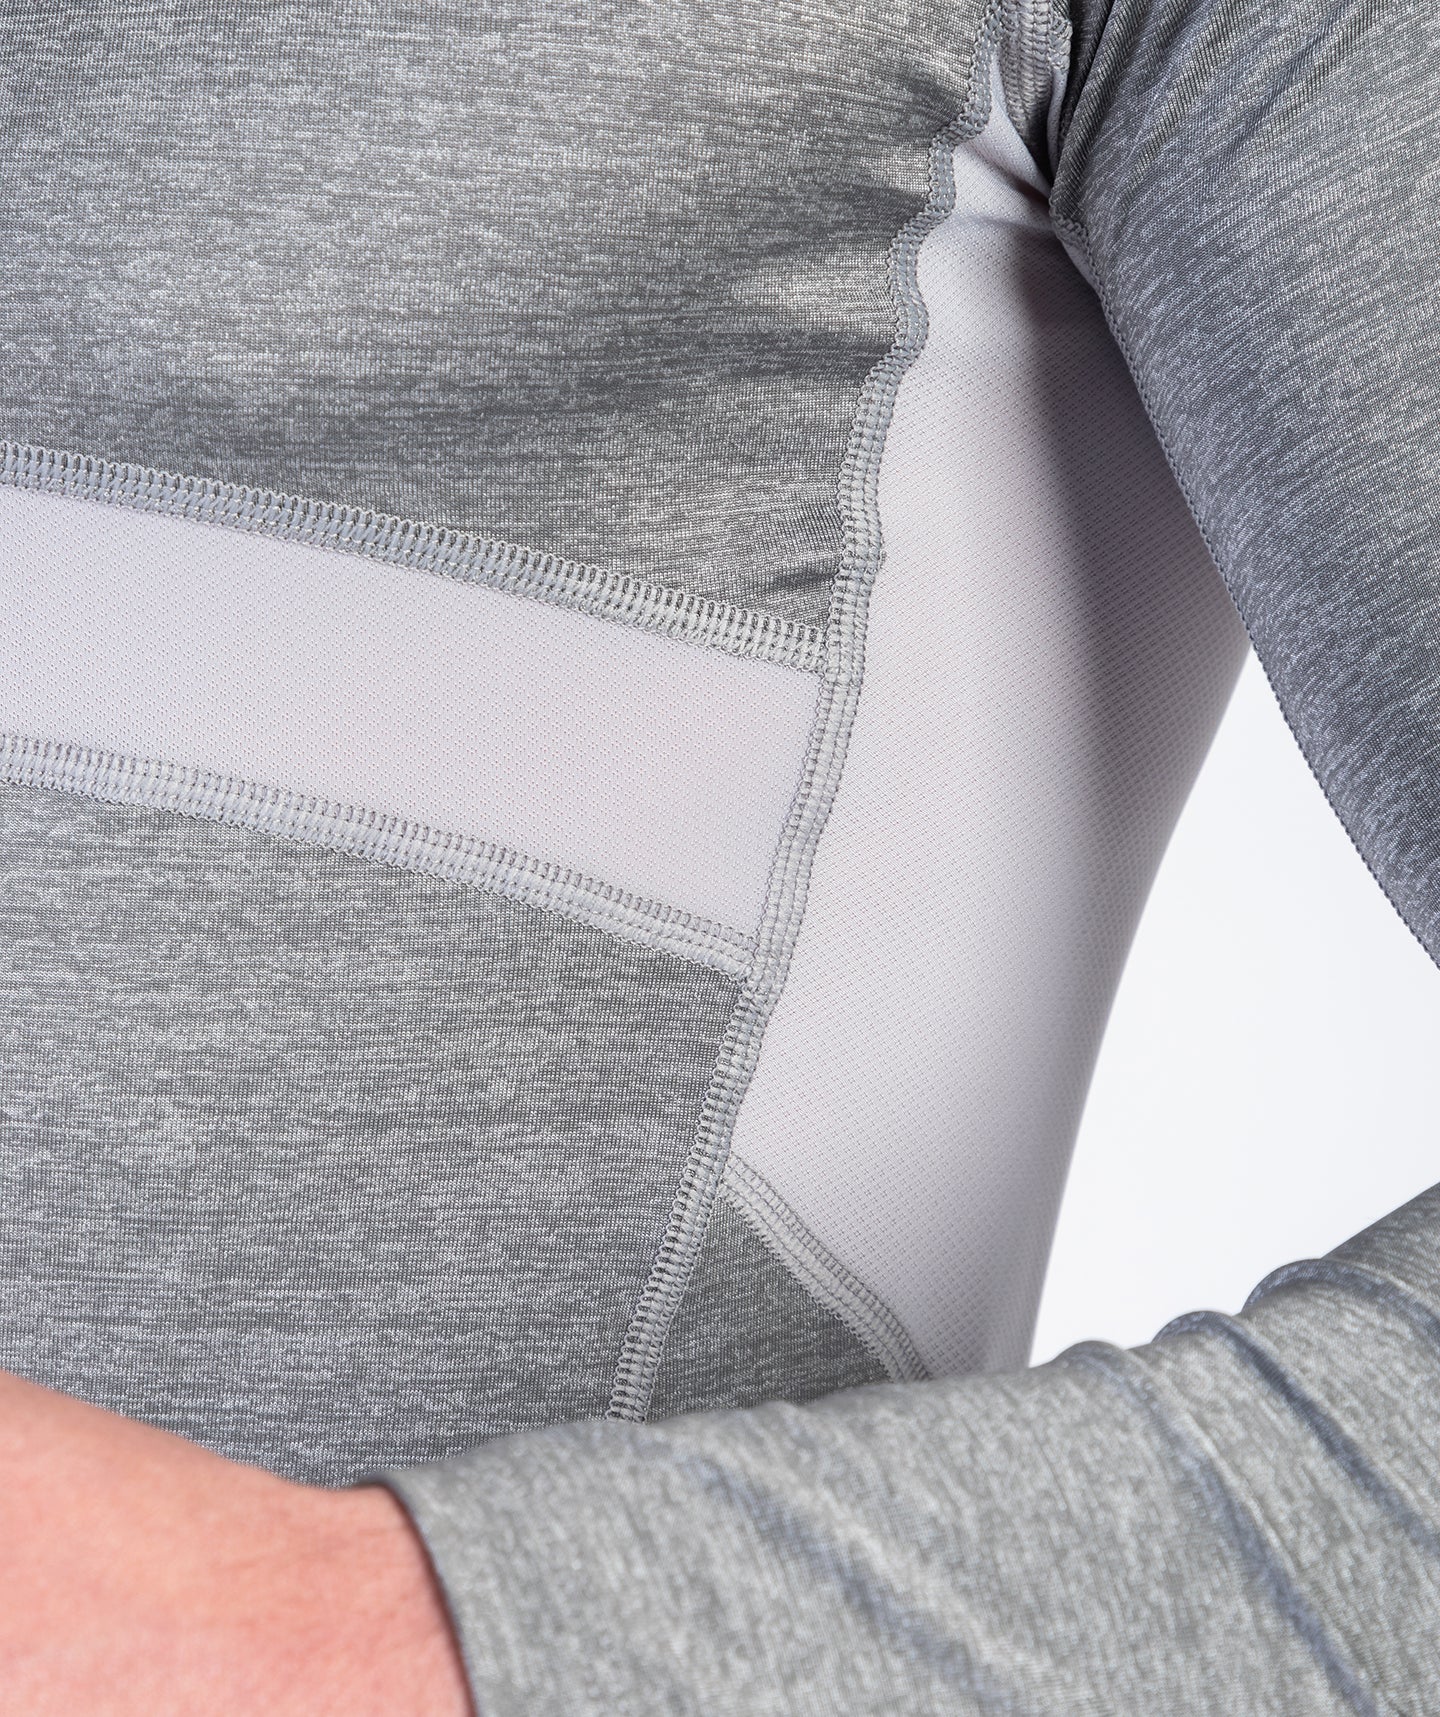 Kg ⚜  
10973-04 ⚜  
B5 ⚜  
PANTONE: Marl Grey ⚜  
single jersey fabric, 45 % nylon 45 % polyester 10 % spandex, 170 gsm, 170 cm, P:Marl Grey